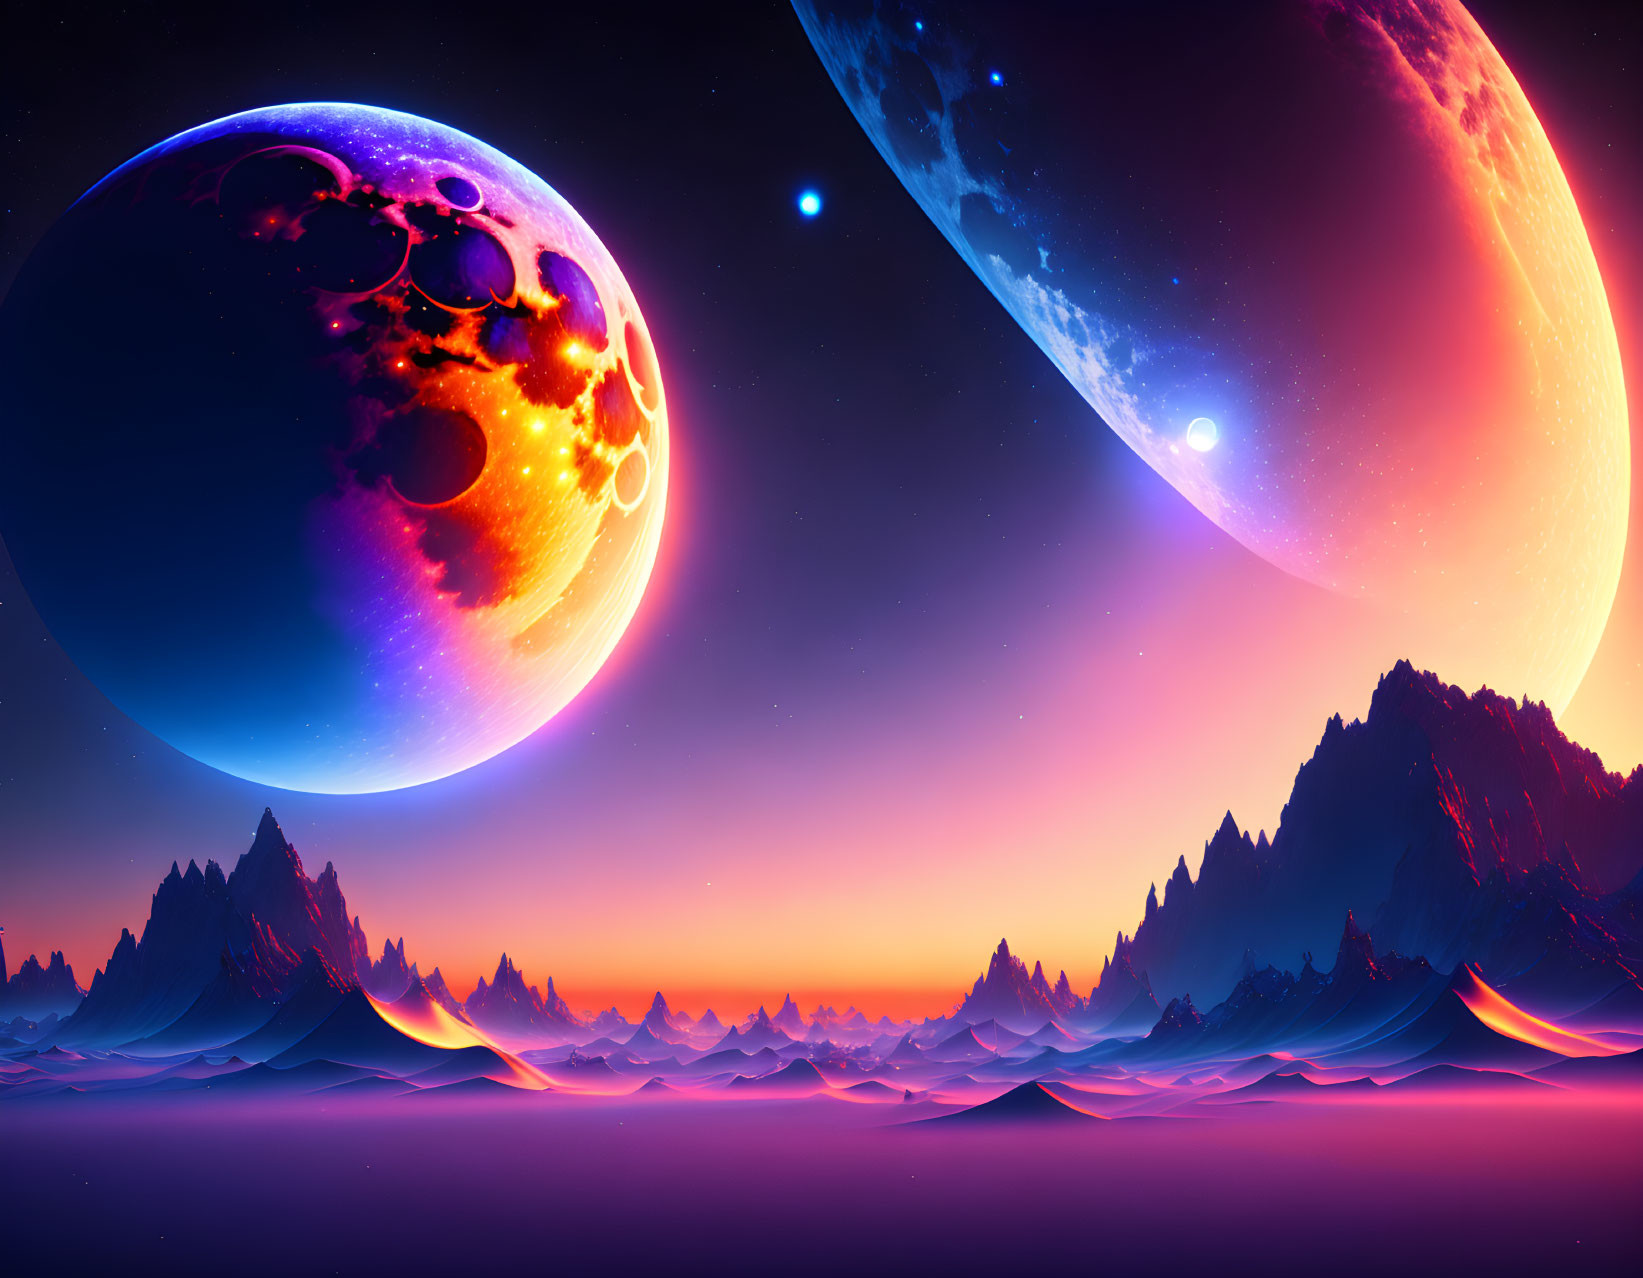 Vibrant sci-fi landscape with celestial bodies and alien terrain